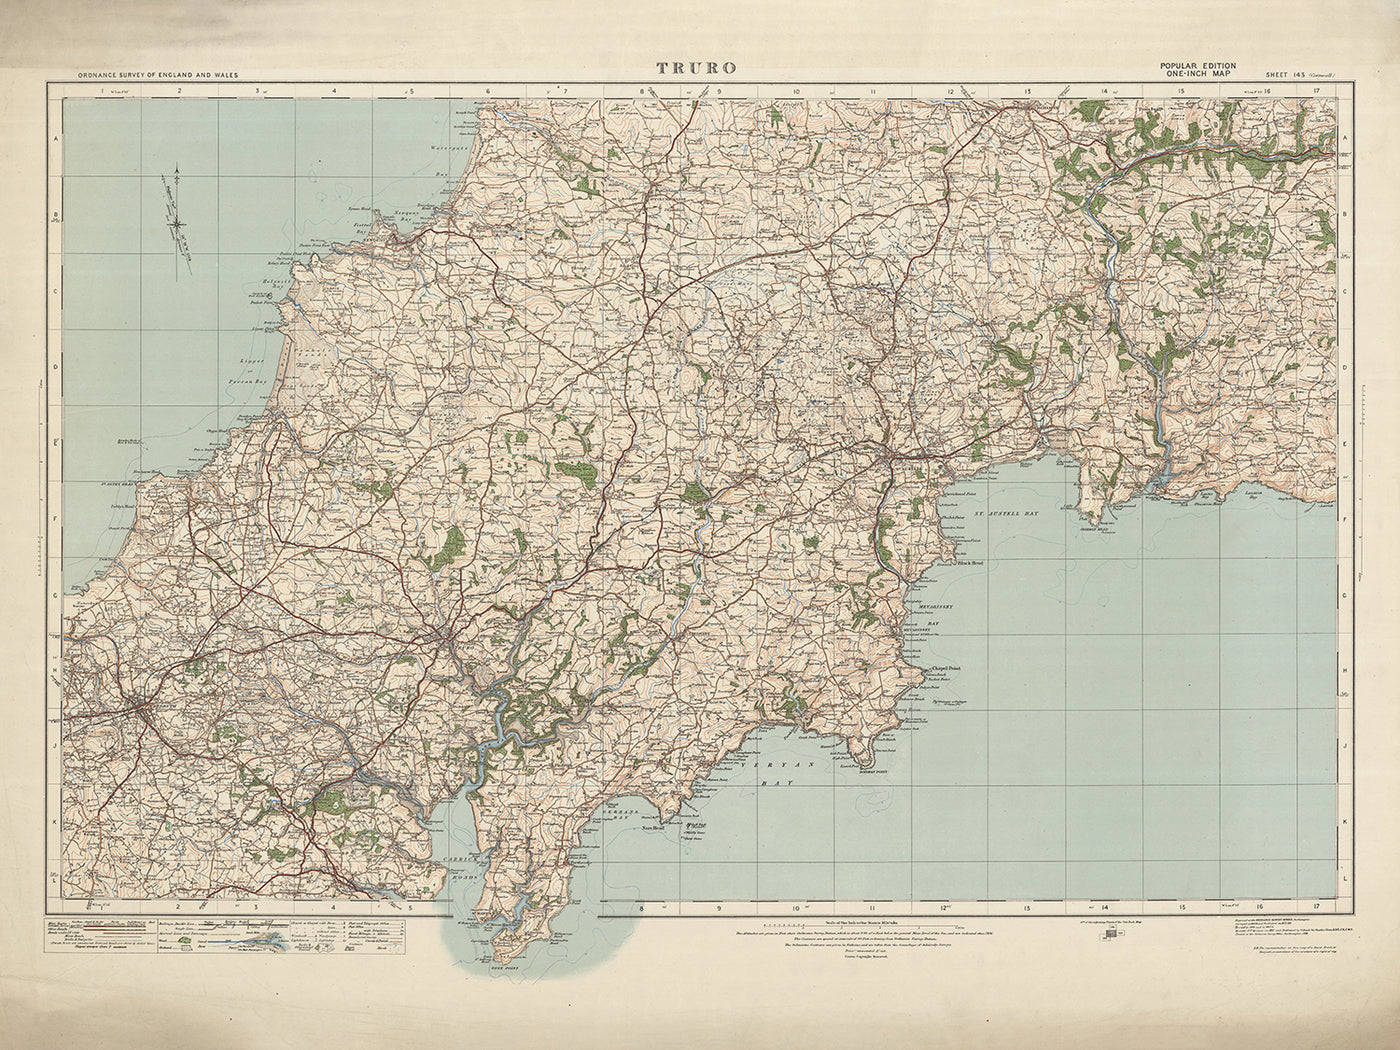 Ancienne carte de l'Ordnance Survey, feuille 143 - Truro, 1919-1926 : Newquay, St Austell, Roche, Bodmin, River Fal, Carn Brea Hill et Goss Moor